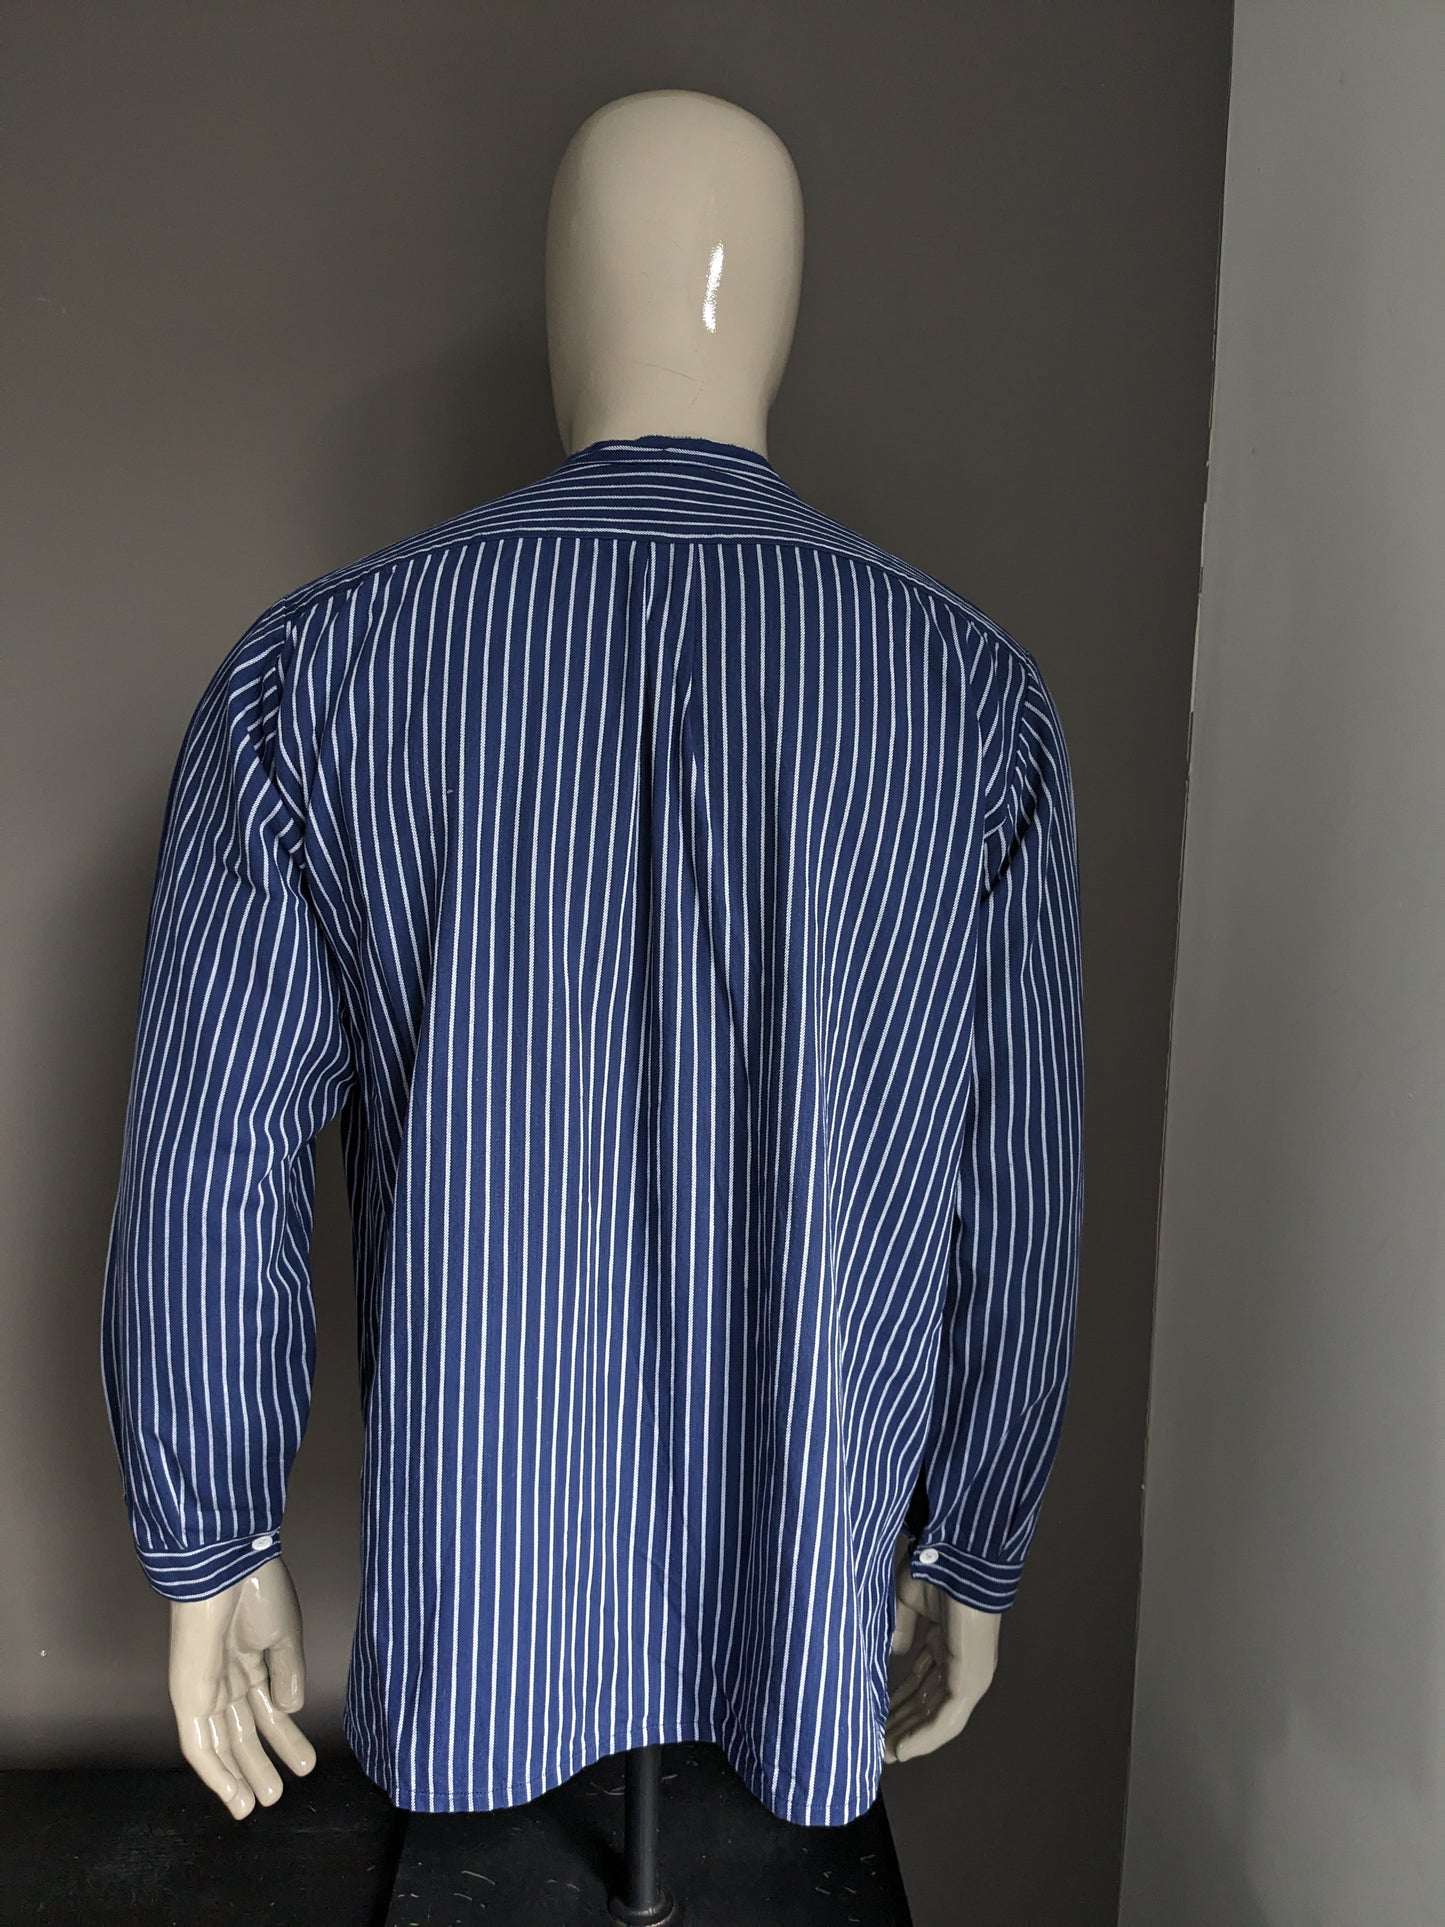 Vintage Modas polo trui / overhemd. Opstaande / farmers / Mao kraag. Blauw wit gestreept. Maat XL.